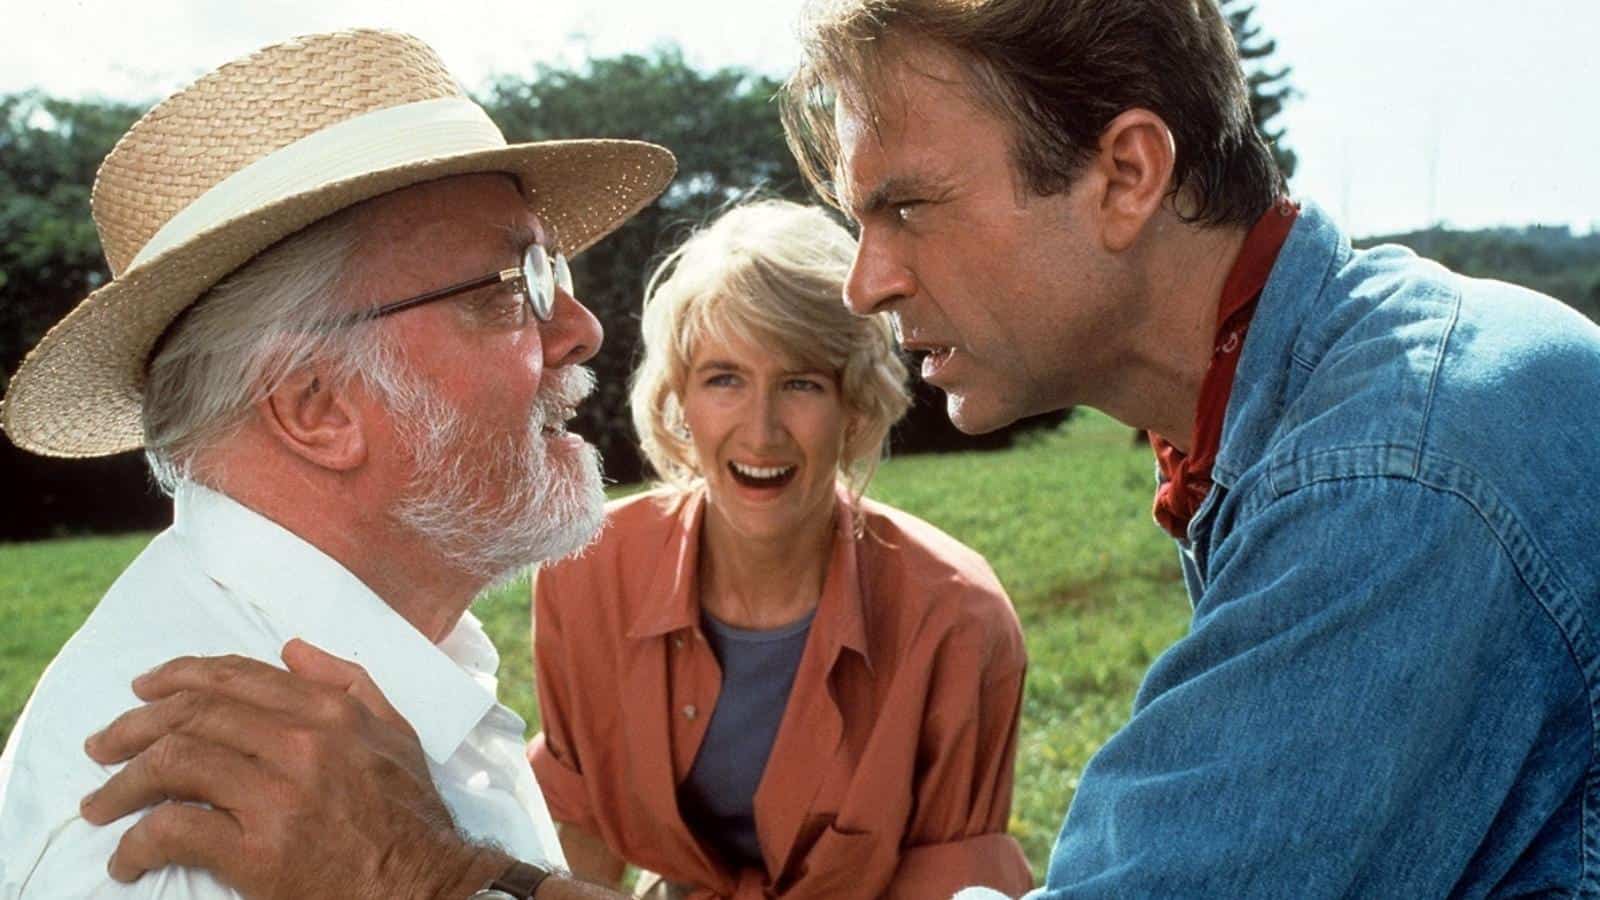 Jurassic Park (1993) Universal Studios